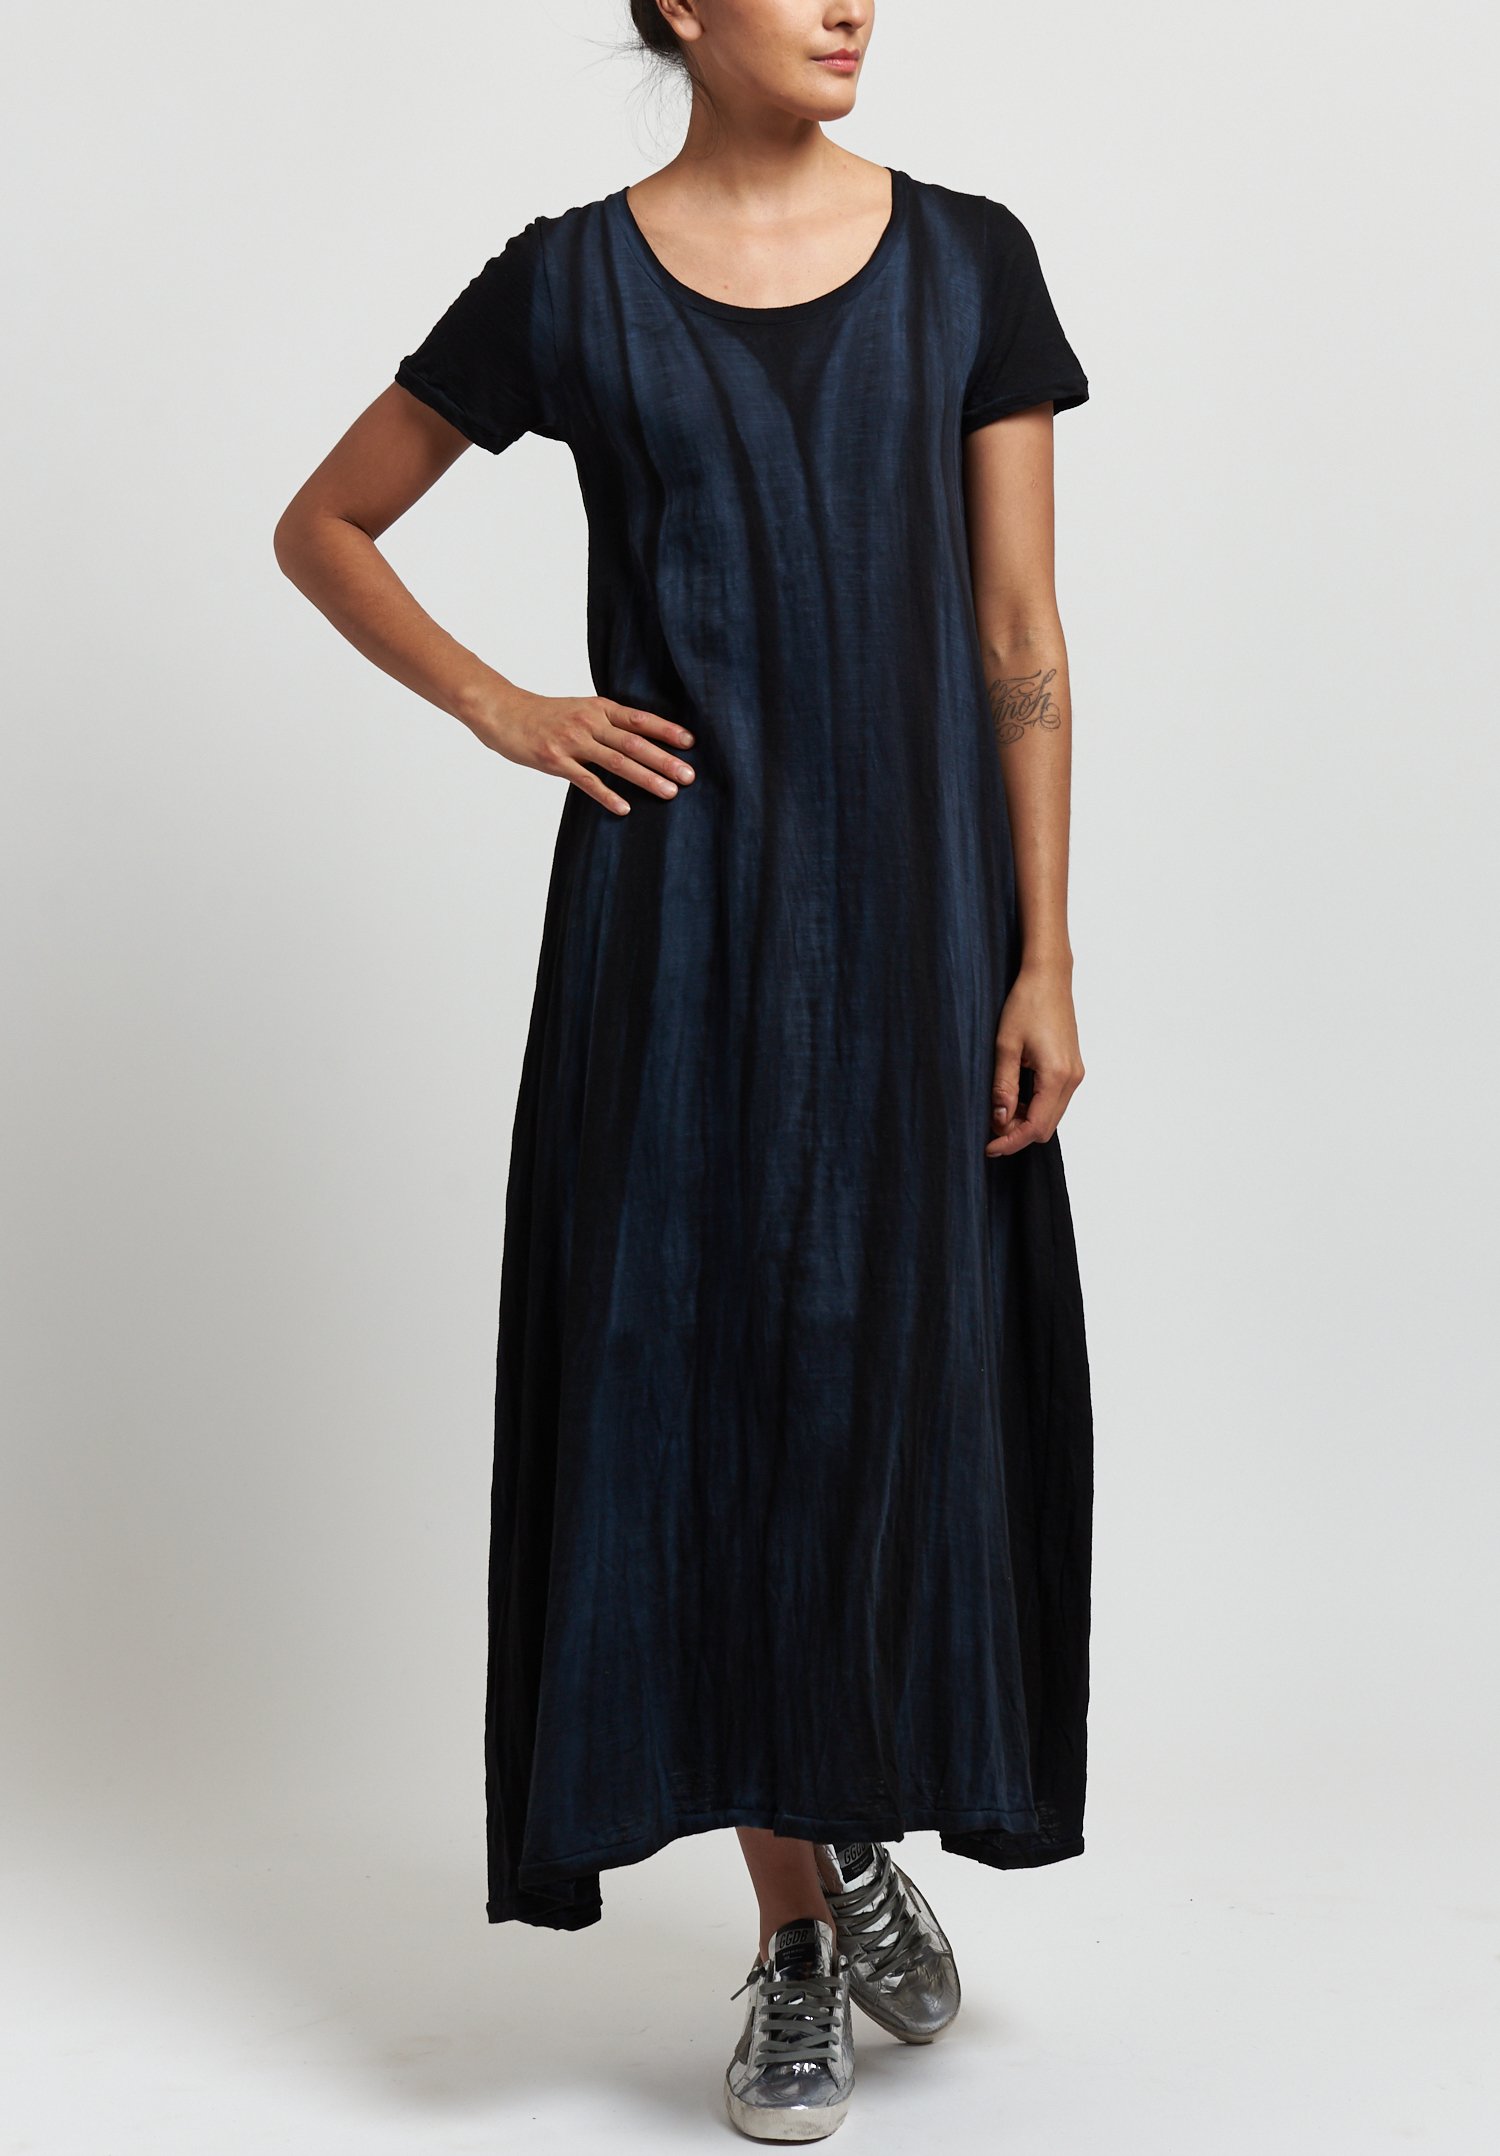 Gilda Midani Monoprix Dress in Marble Black | Santa Fe Dry Goods ...